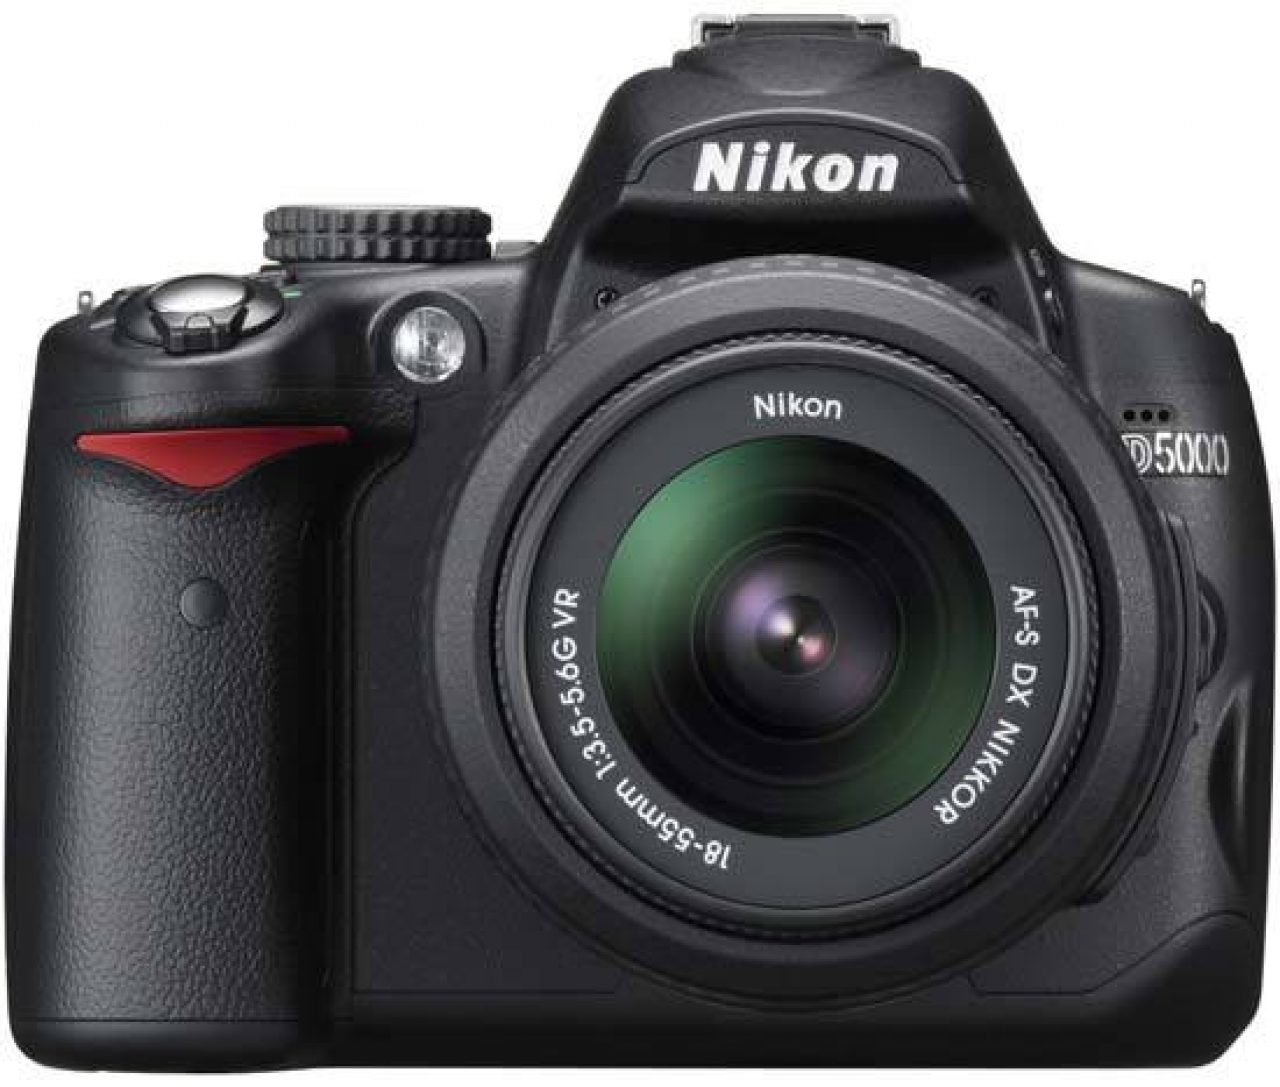 Absoluut onderwerpen consultant Nikon D5000 Review | Photography Blog